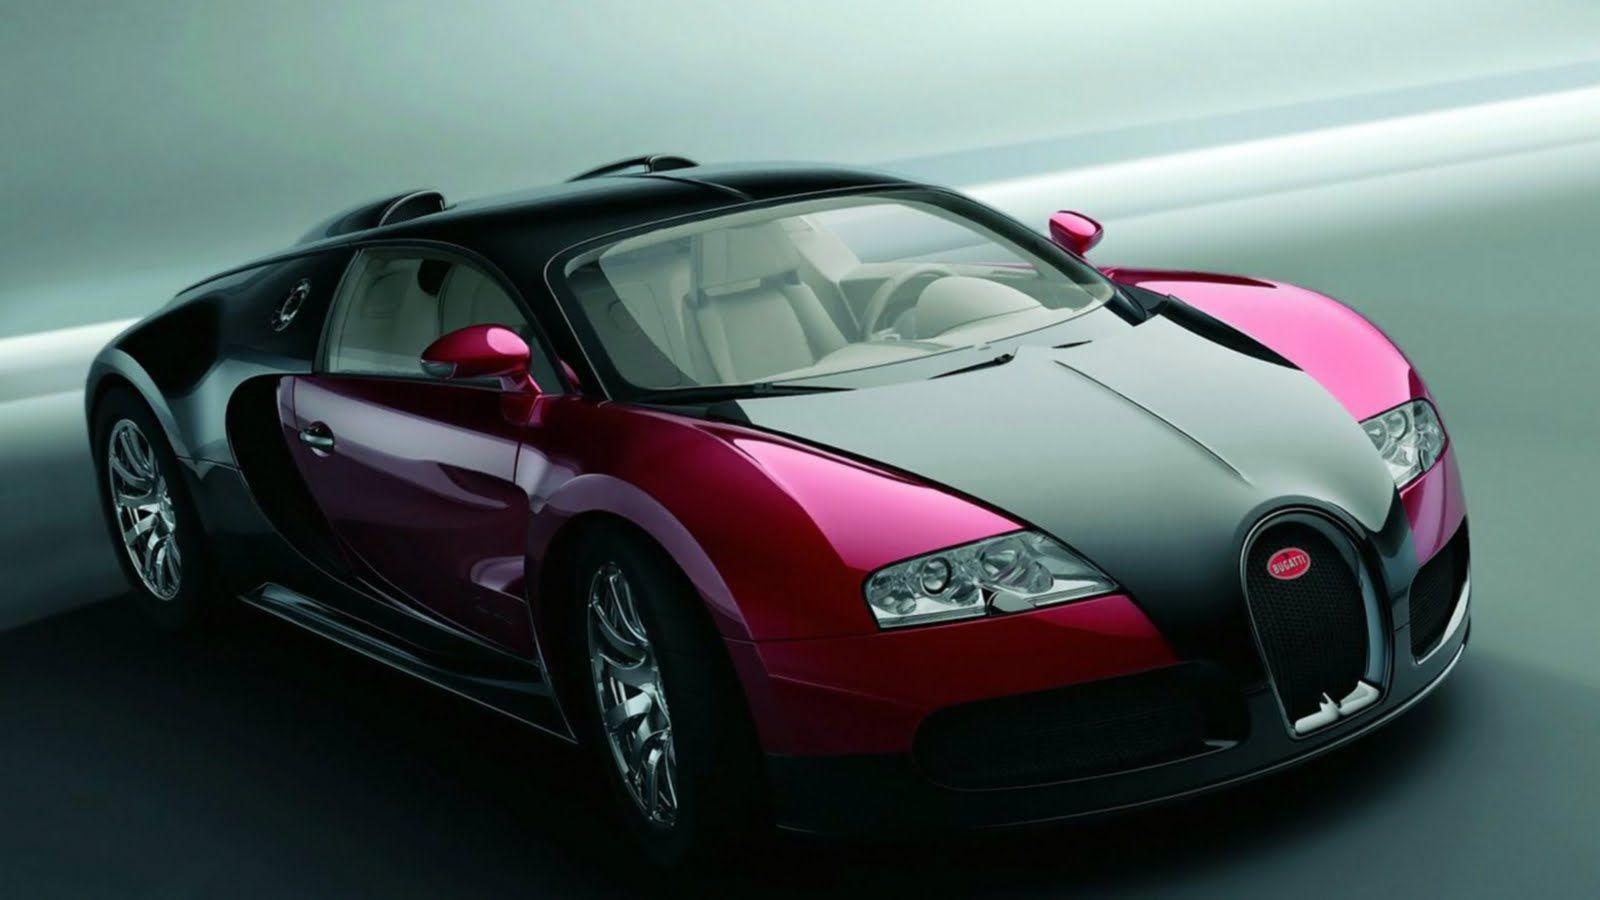 The Bugatti Veyron EB is a mid